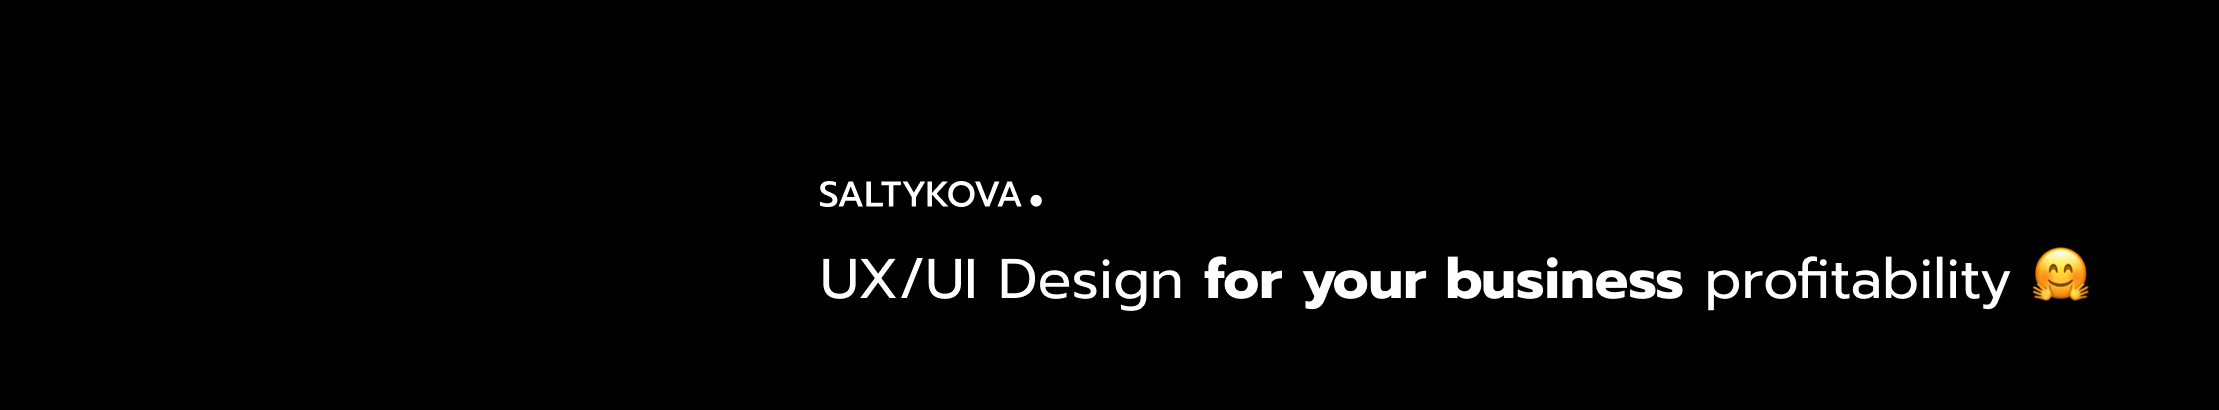 Svetlana Saltykova's profile banner